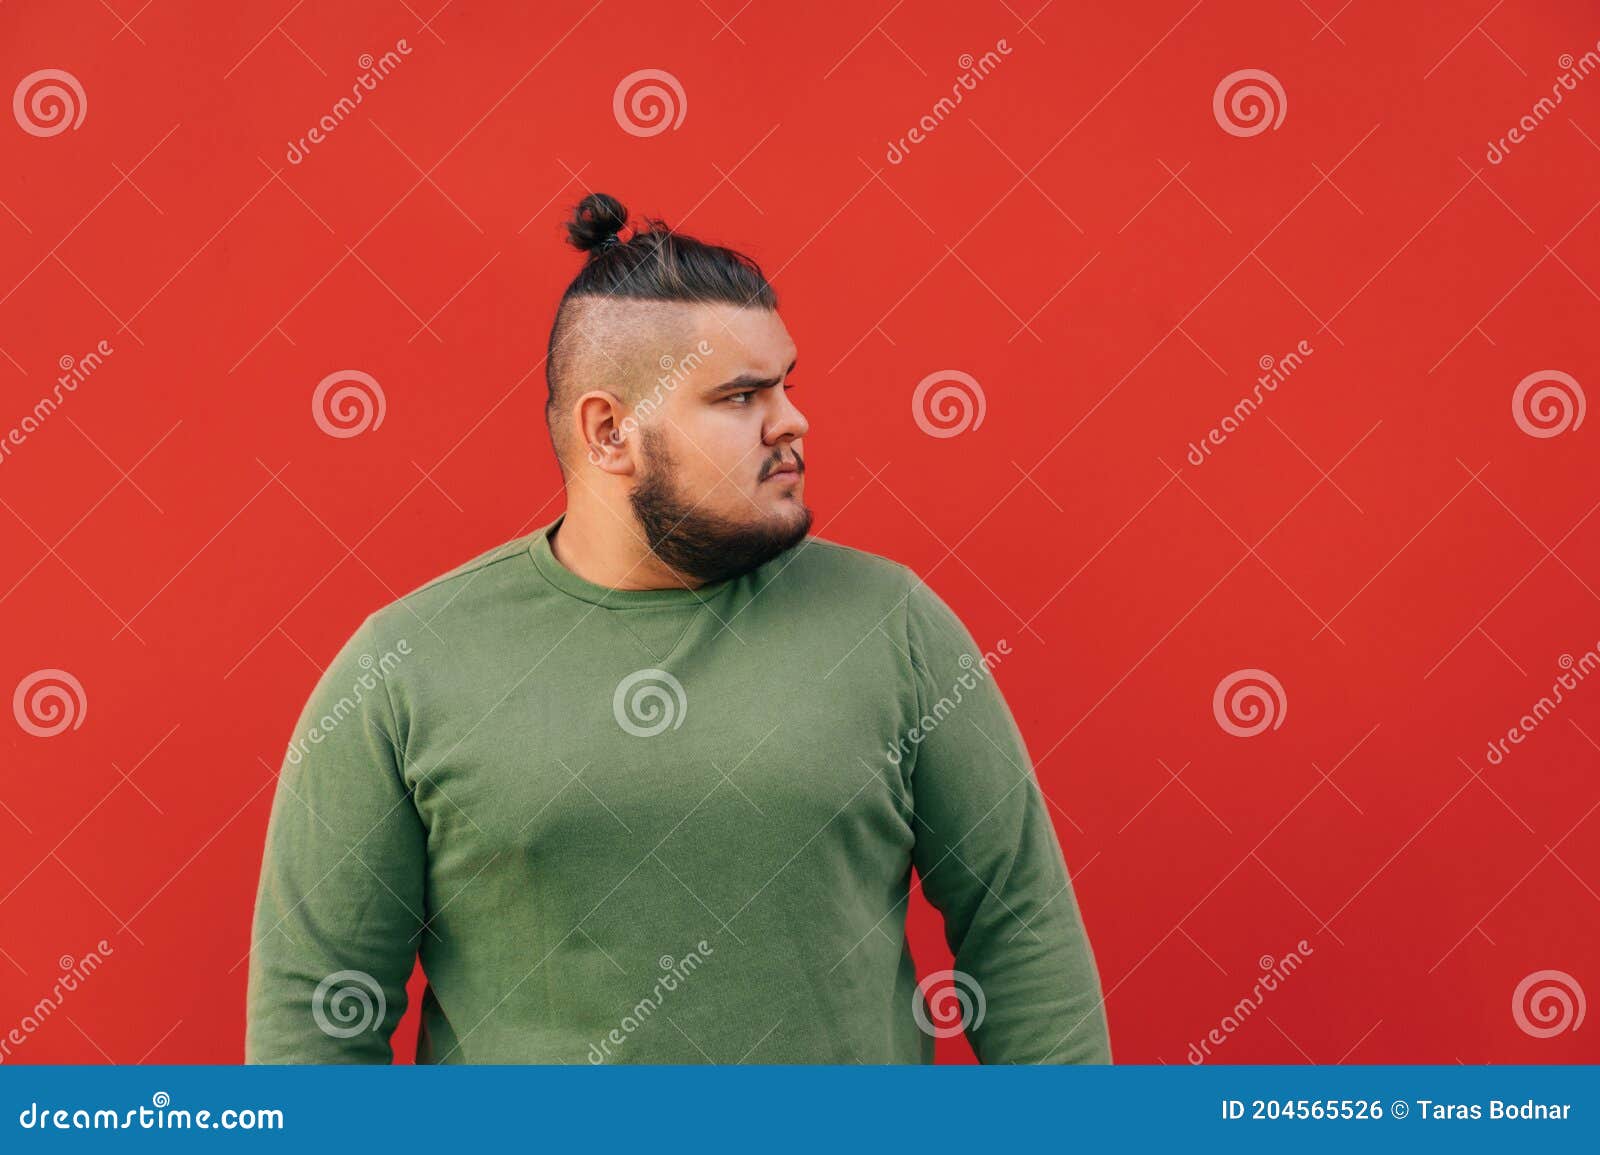 fat people haircut men like up｜TikTok Search